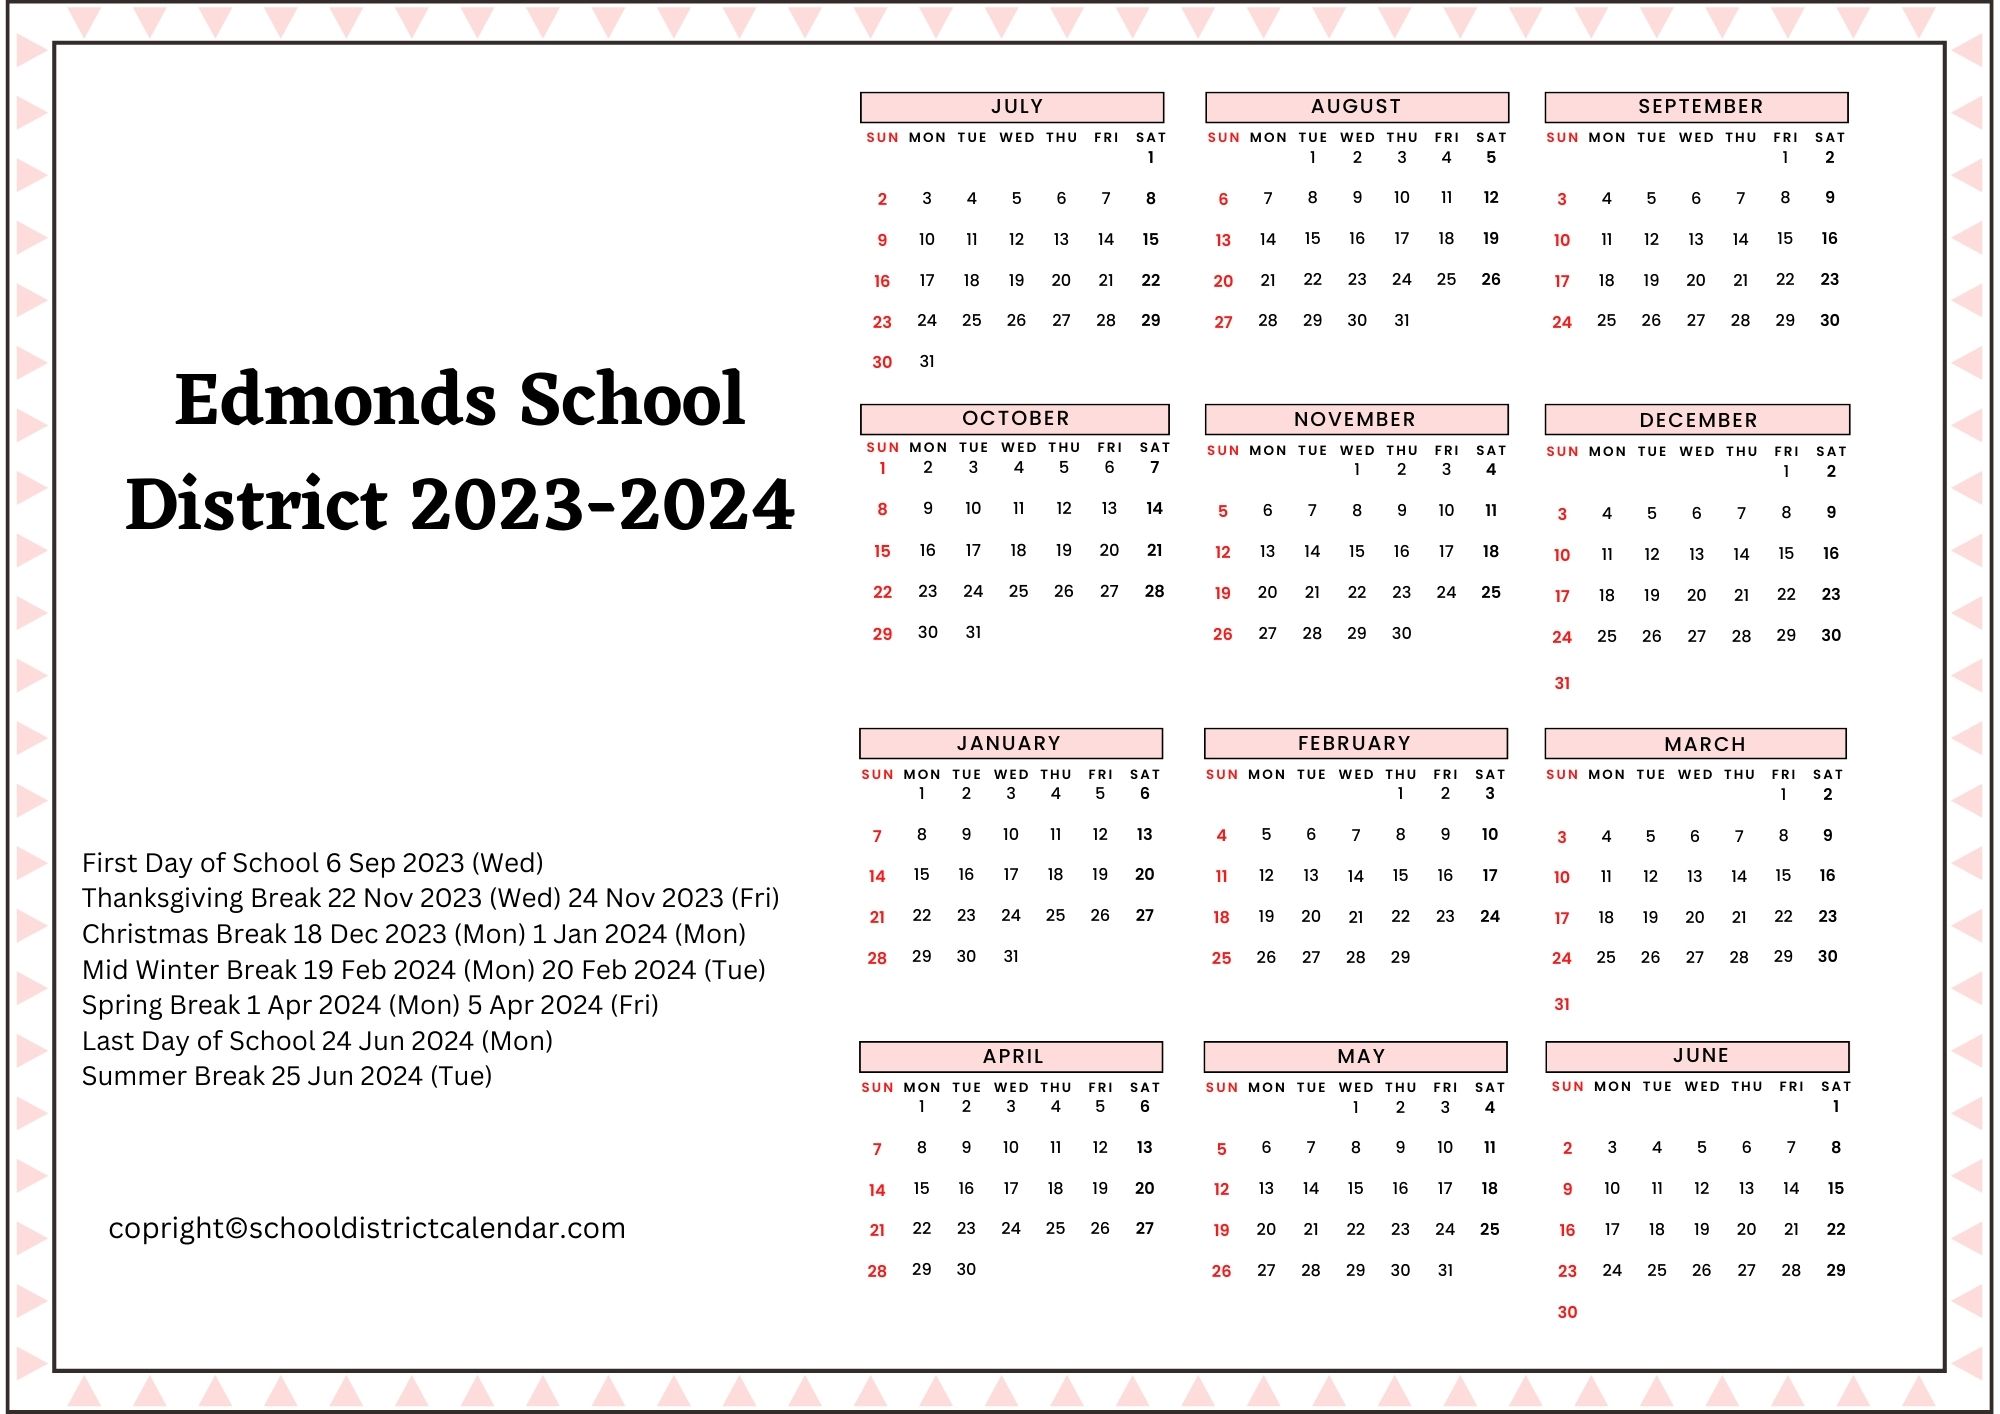 Edmonds School District Calendar Holidays 2023 2024